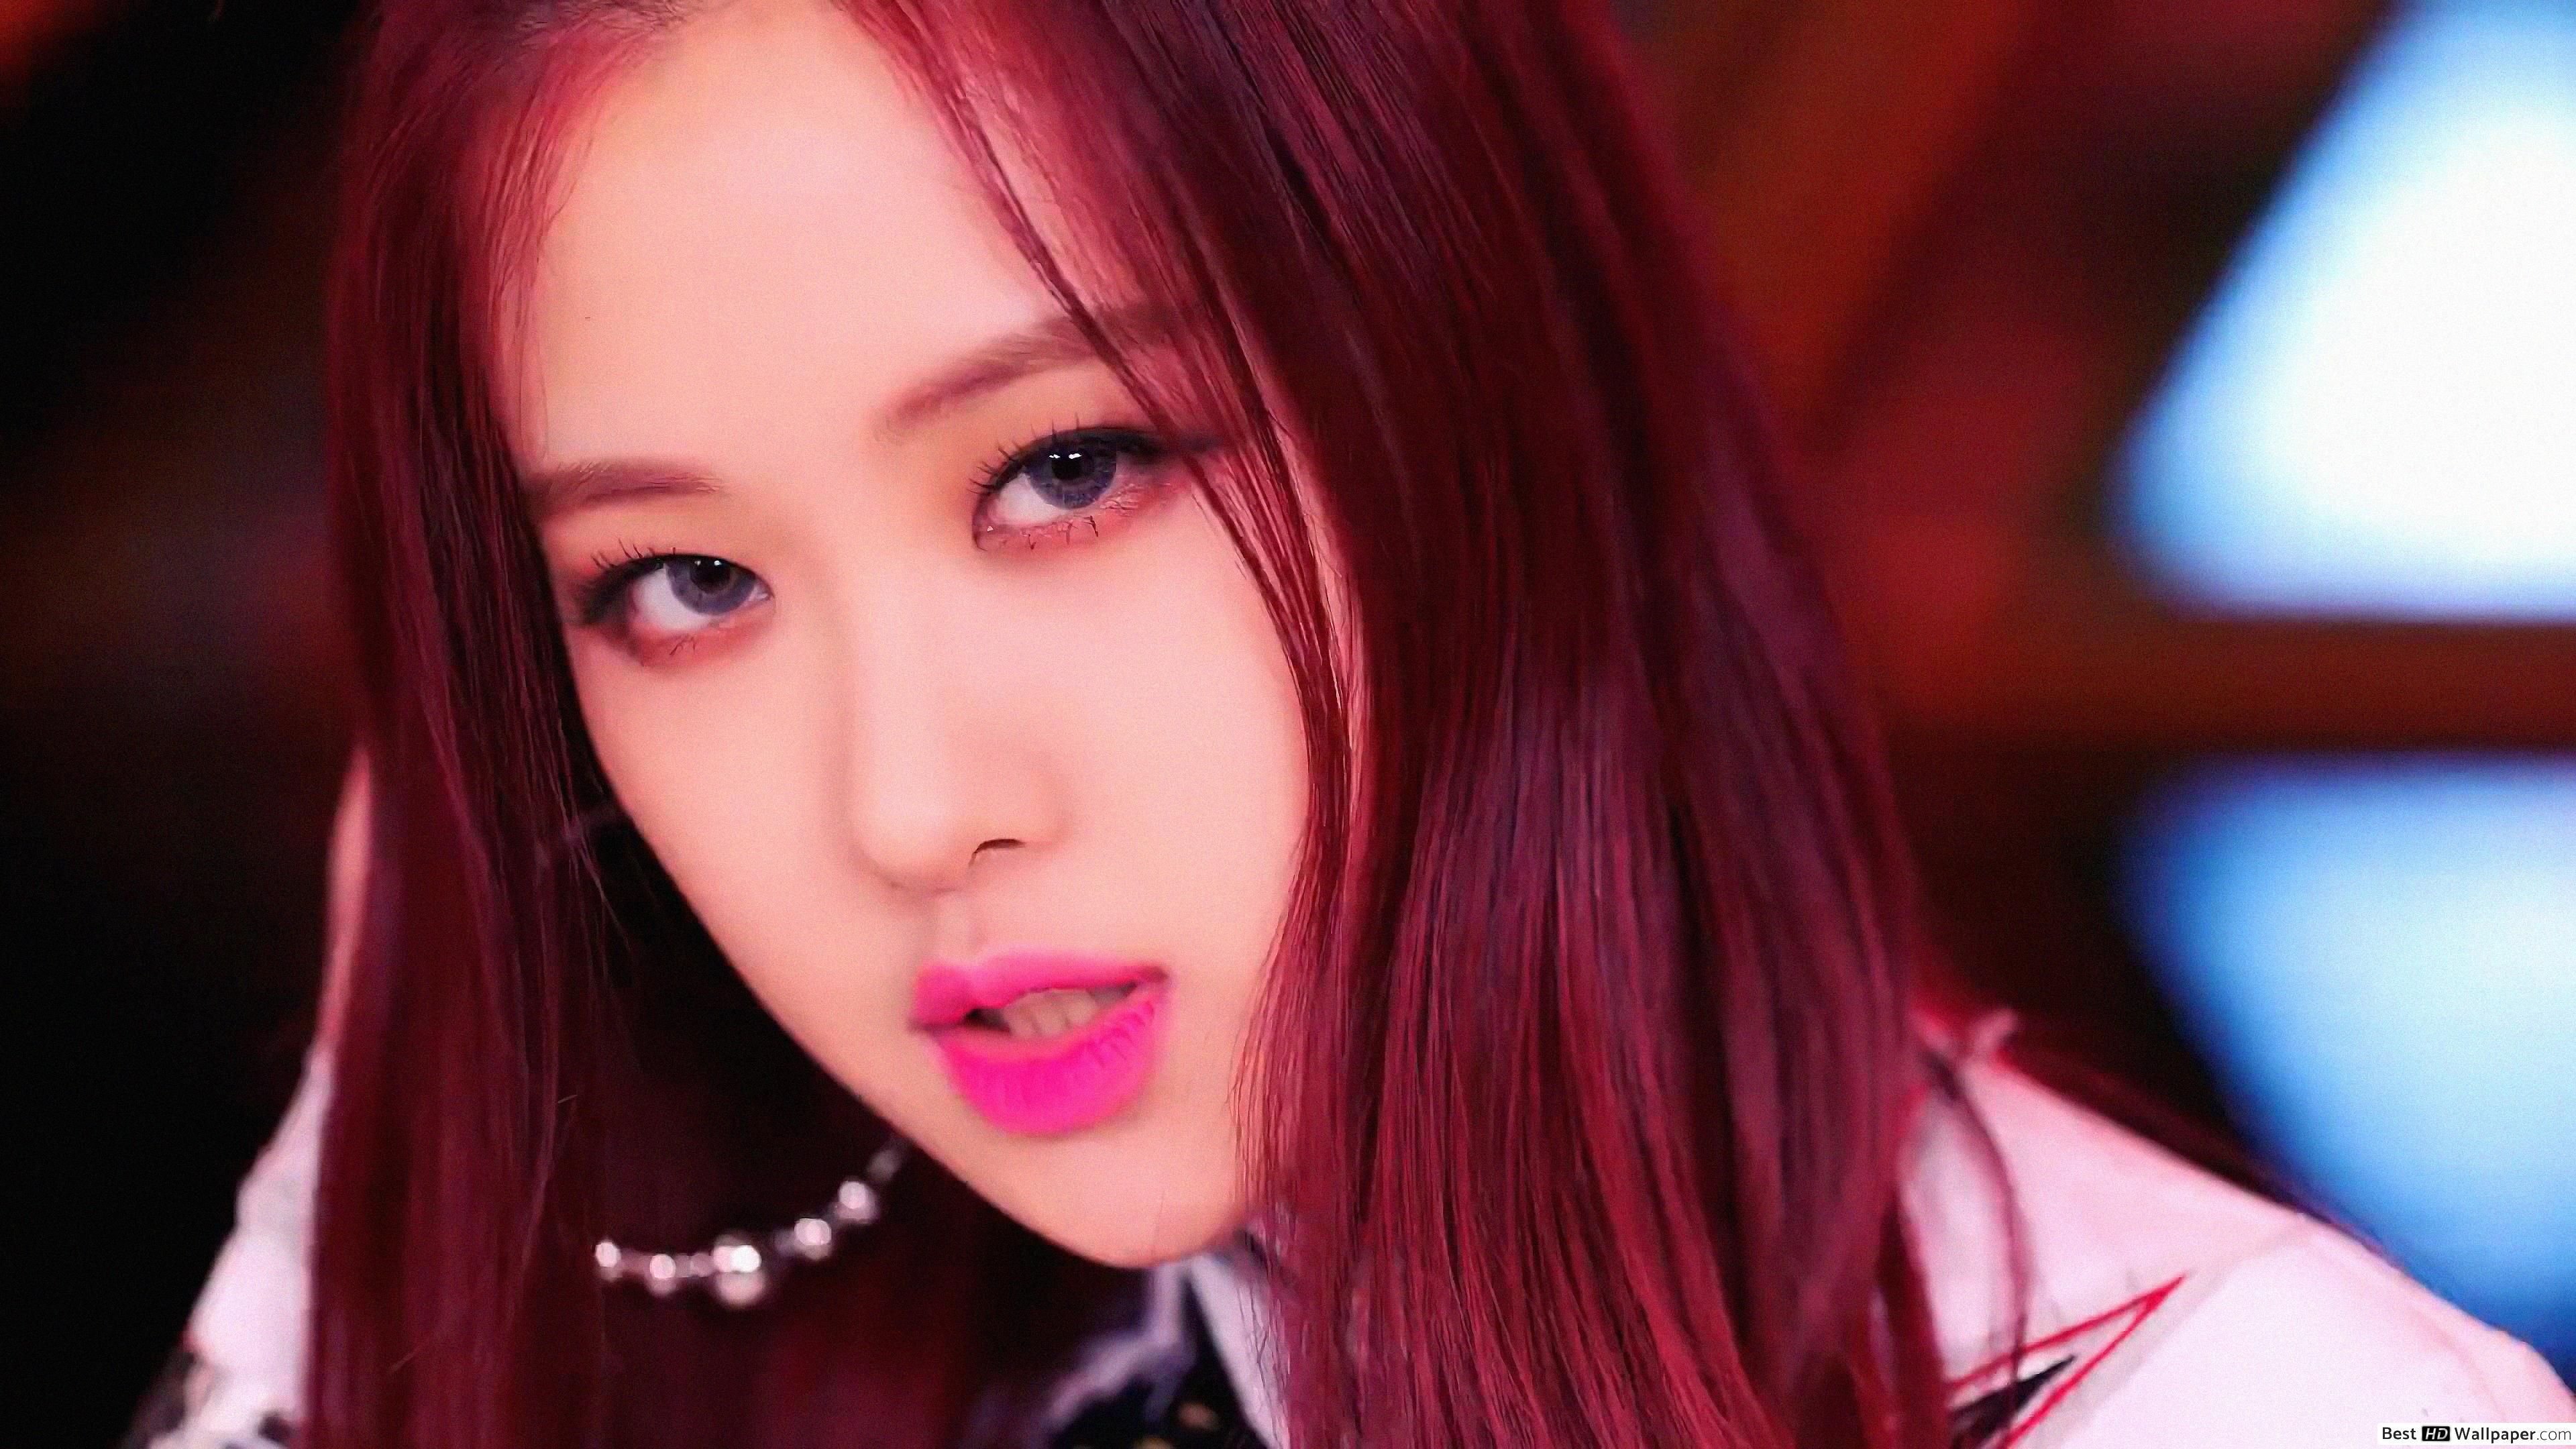 Korean Singer 'Rose' from BlackPink HD wallpaper download